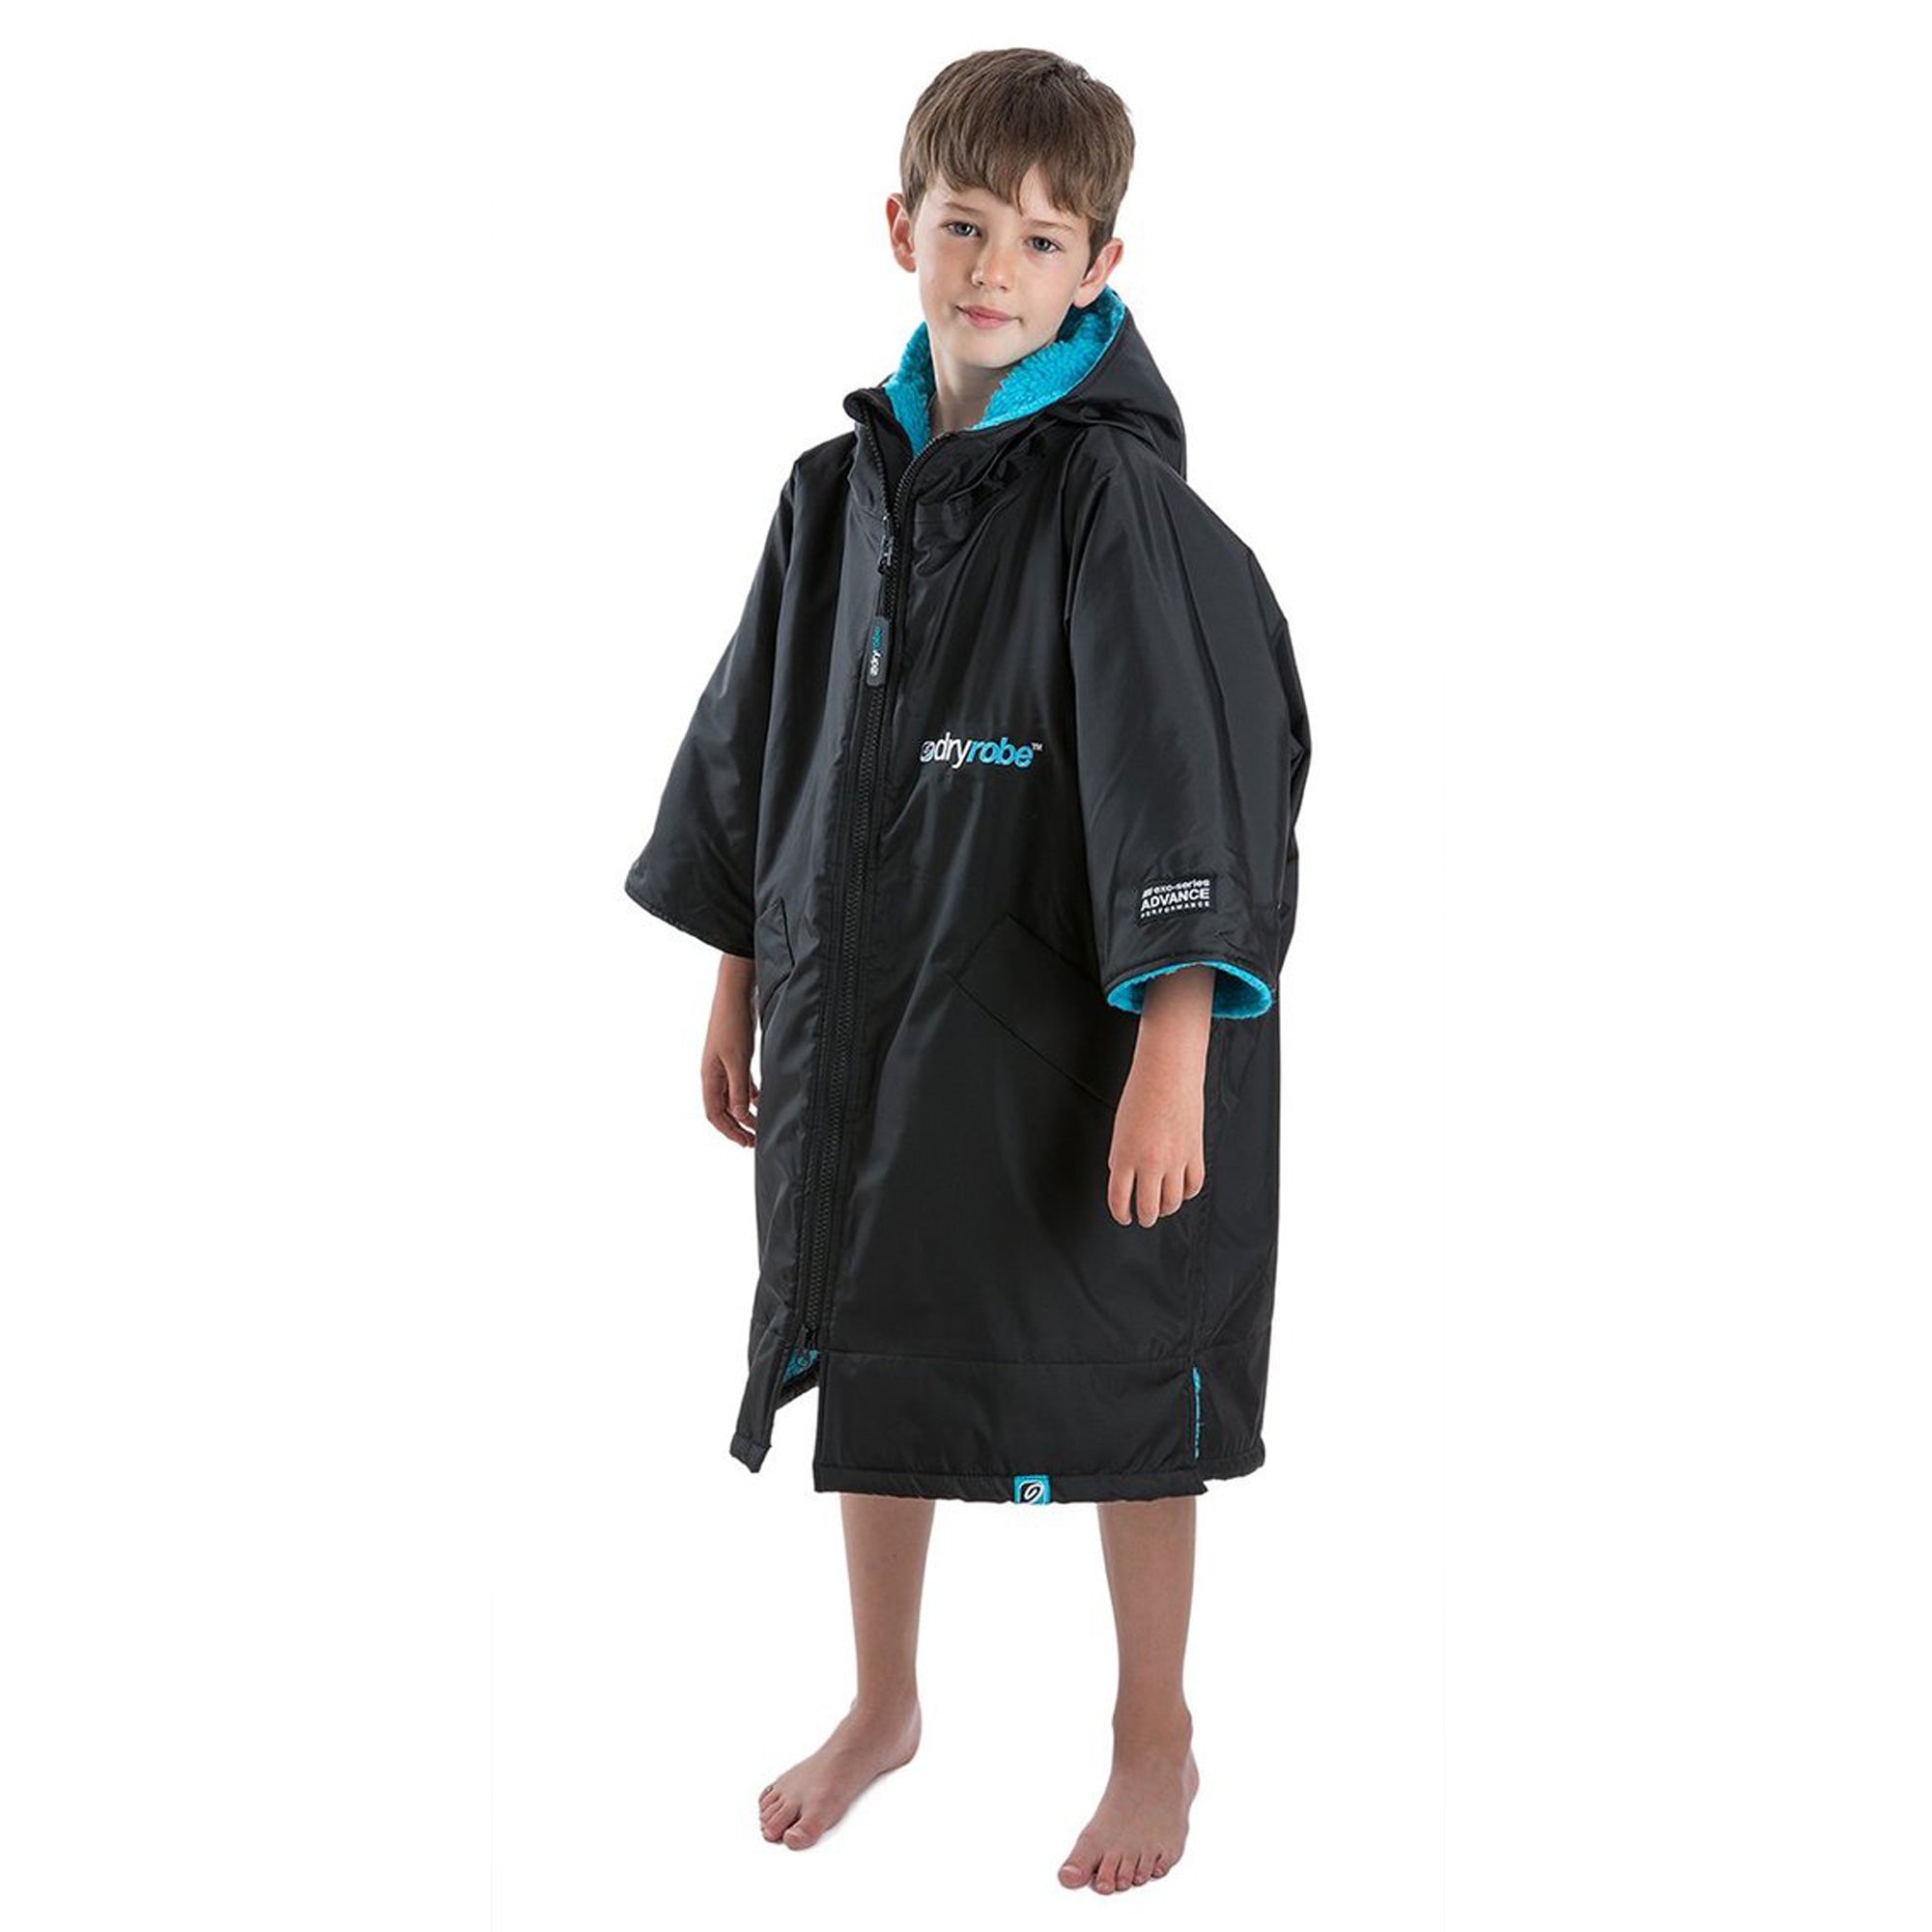 Dryrobe Advance Kids Short Sleeve - Black & Blue